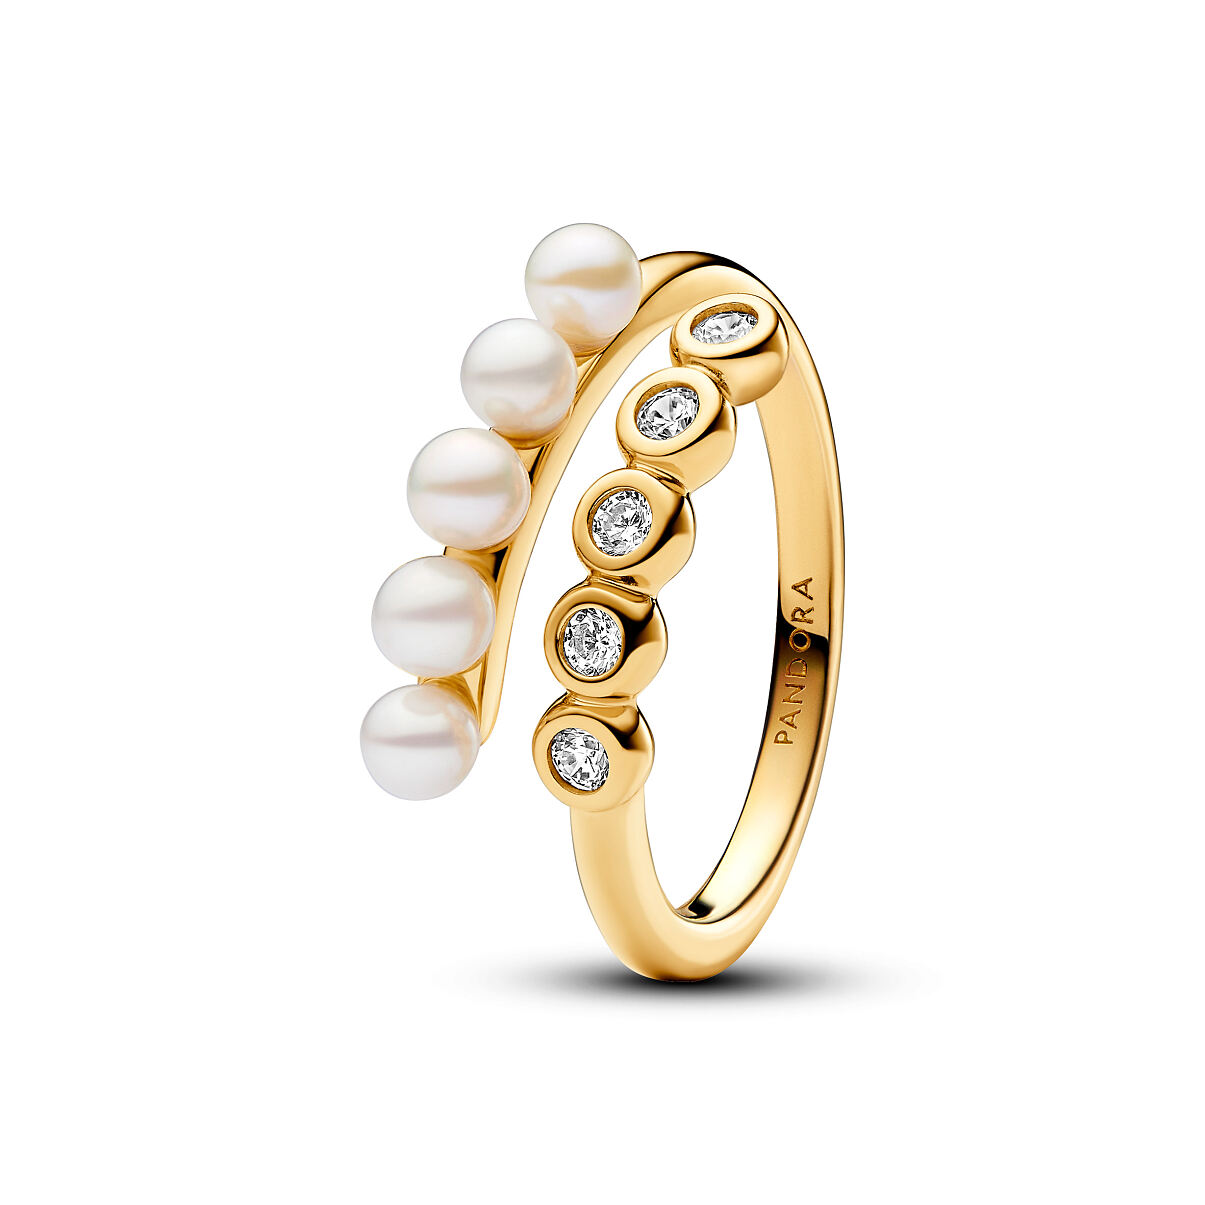 Pandora_Ring_14k Gold-plated_Freshwater Pearls_Cubic Zirconia_163146C01_149,00 Euro (2)